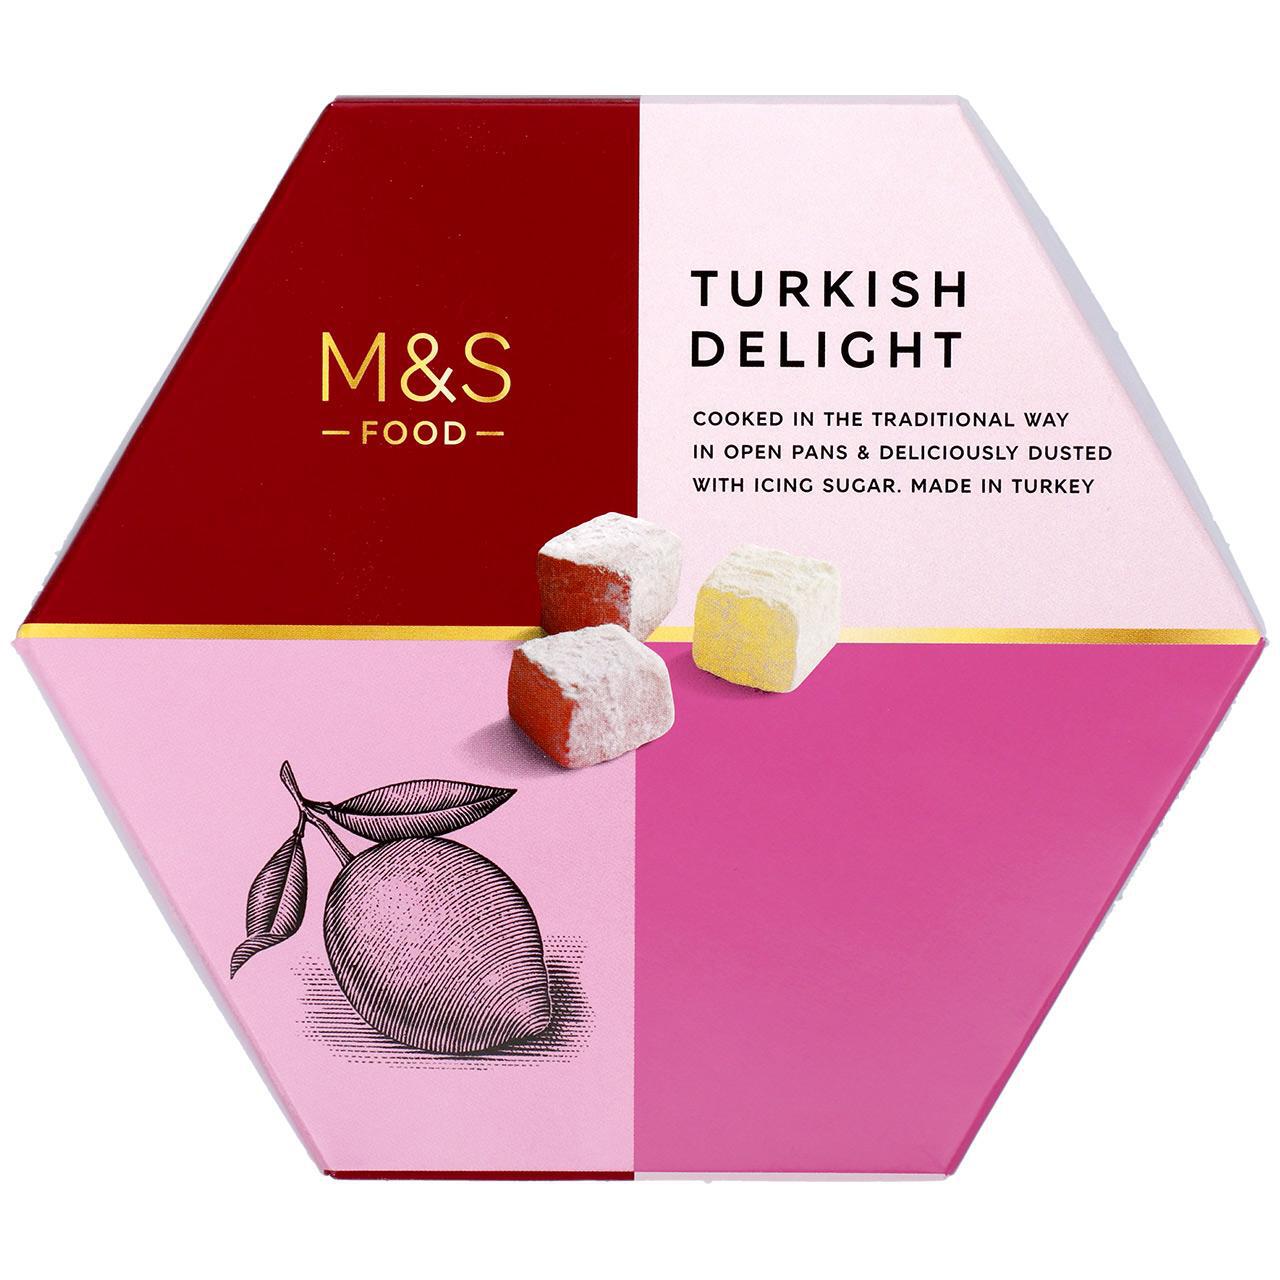 M&S Turkish Delight 350g